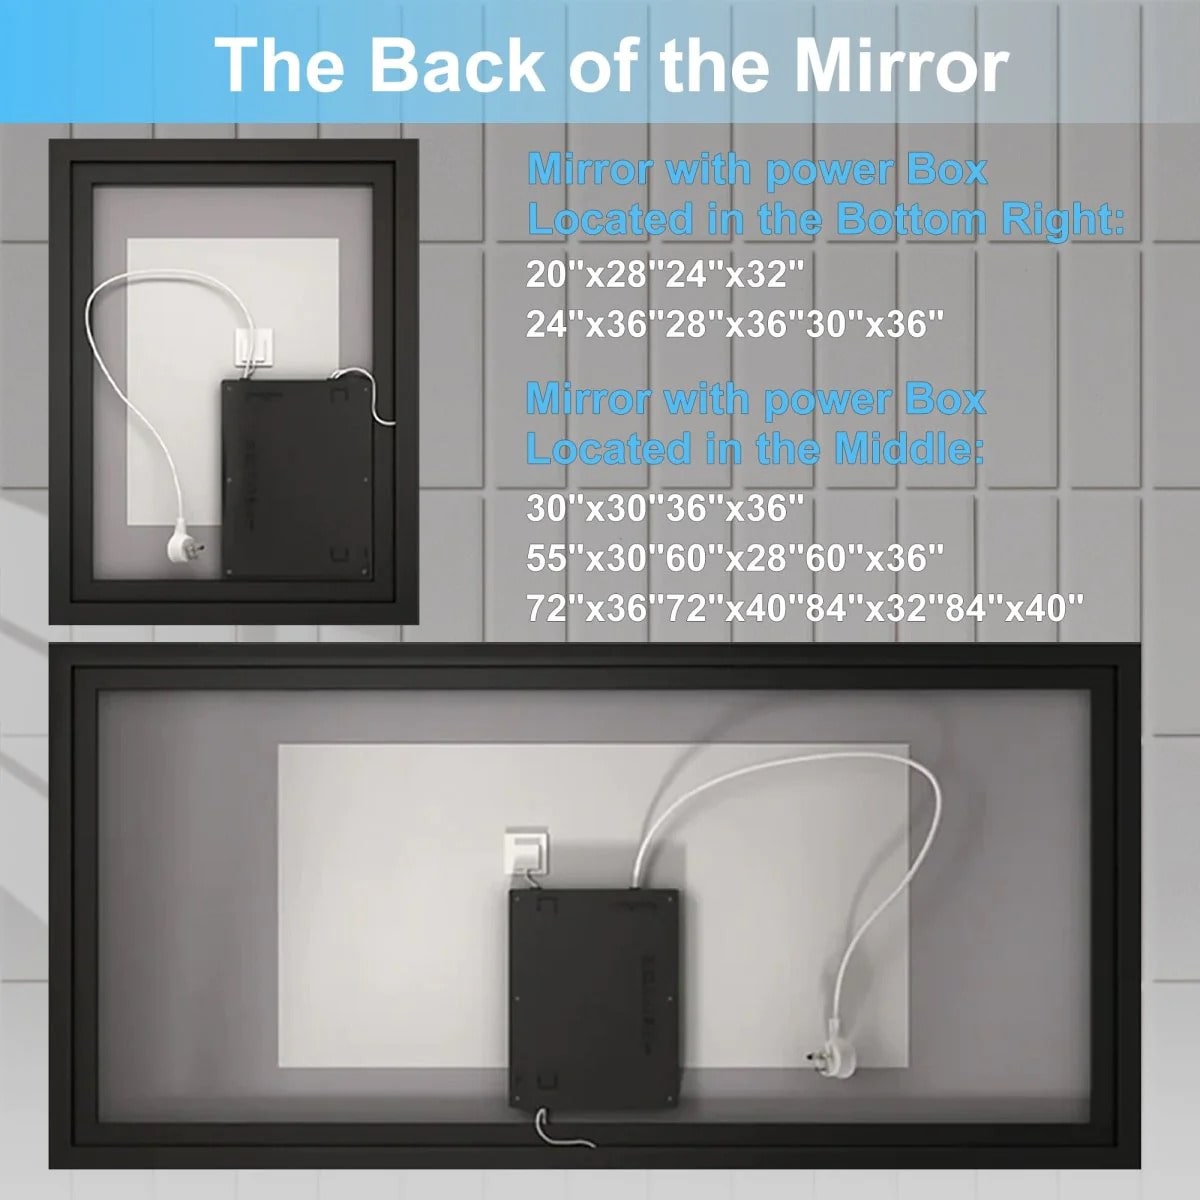 Apex-Noir 36"x 36" LED Mirror